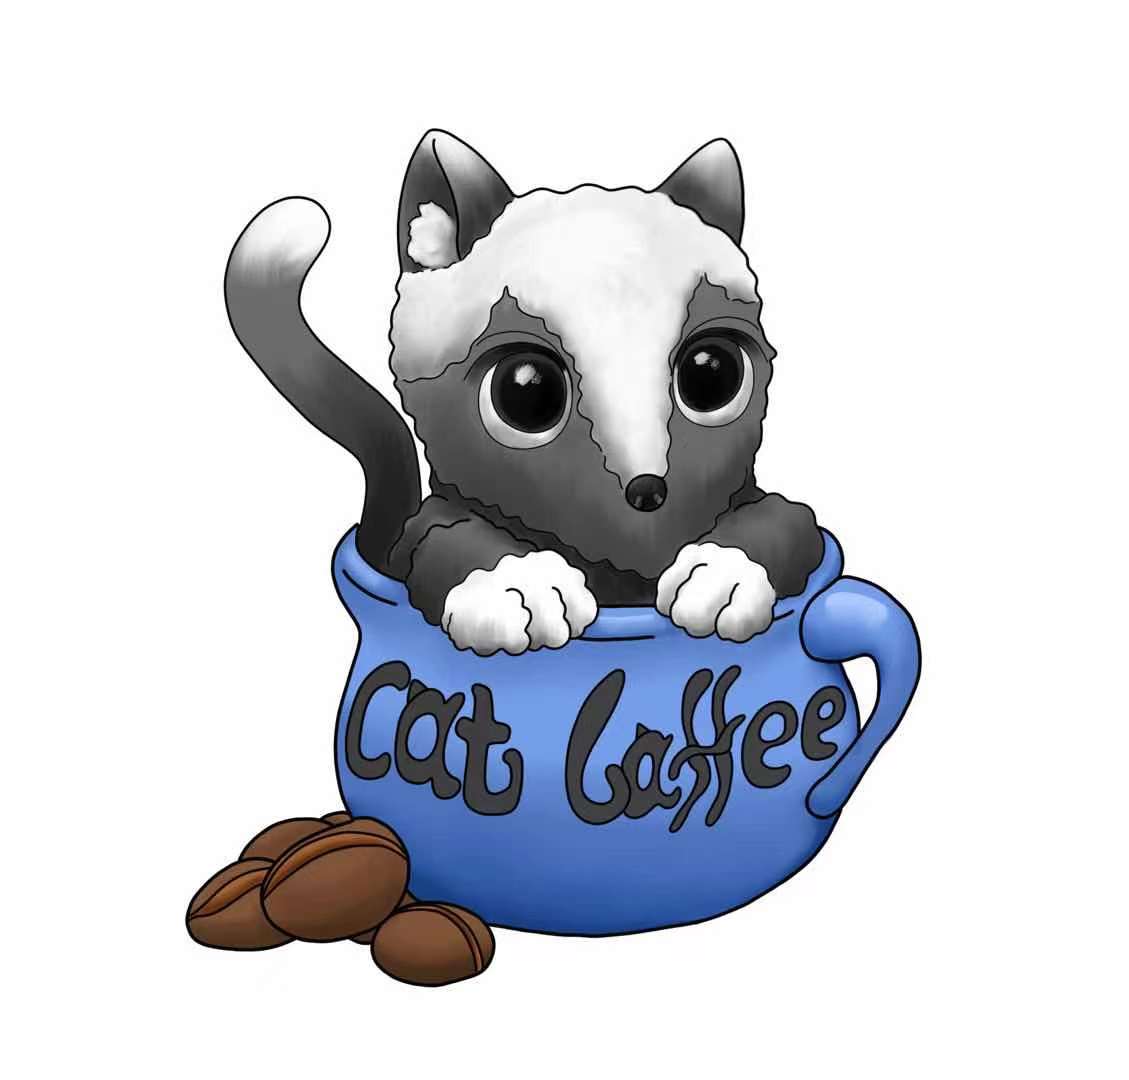 CATC - CatsCoffee